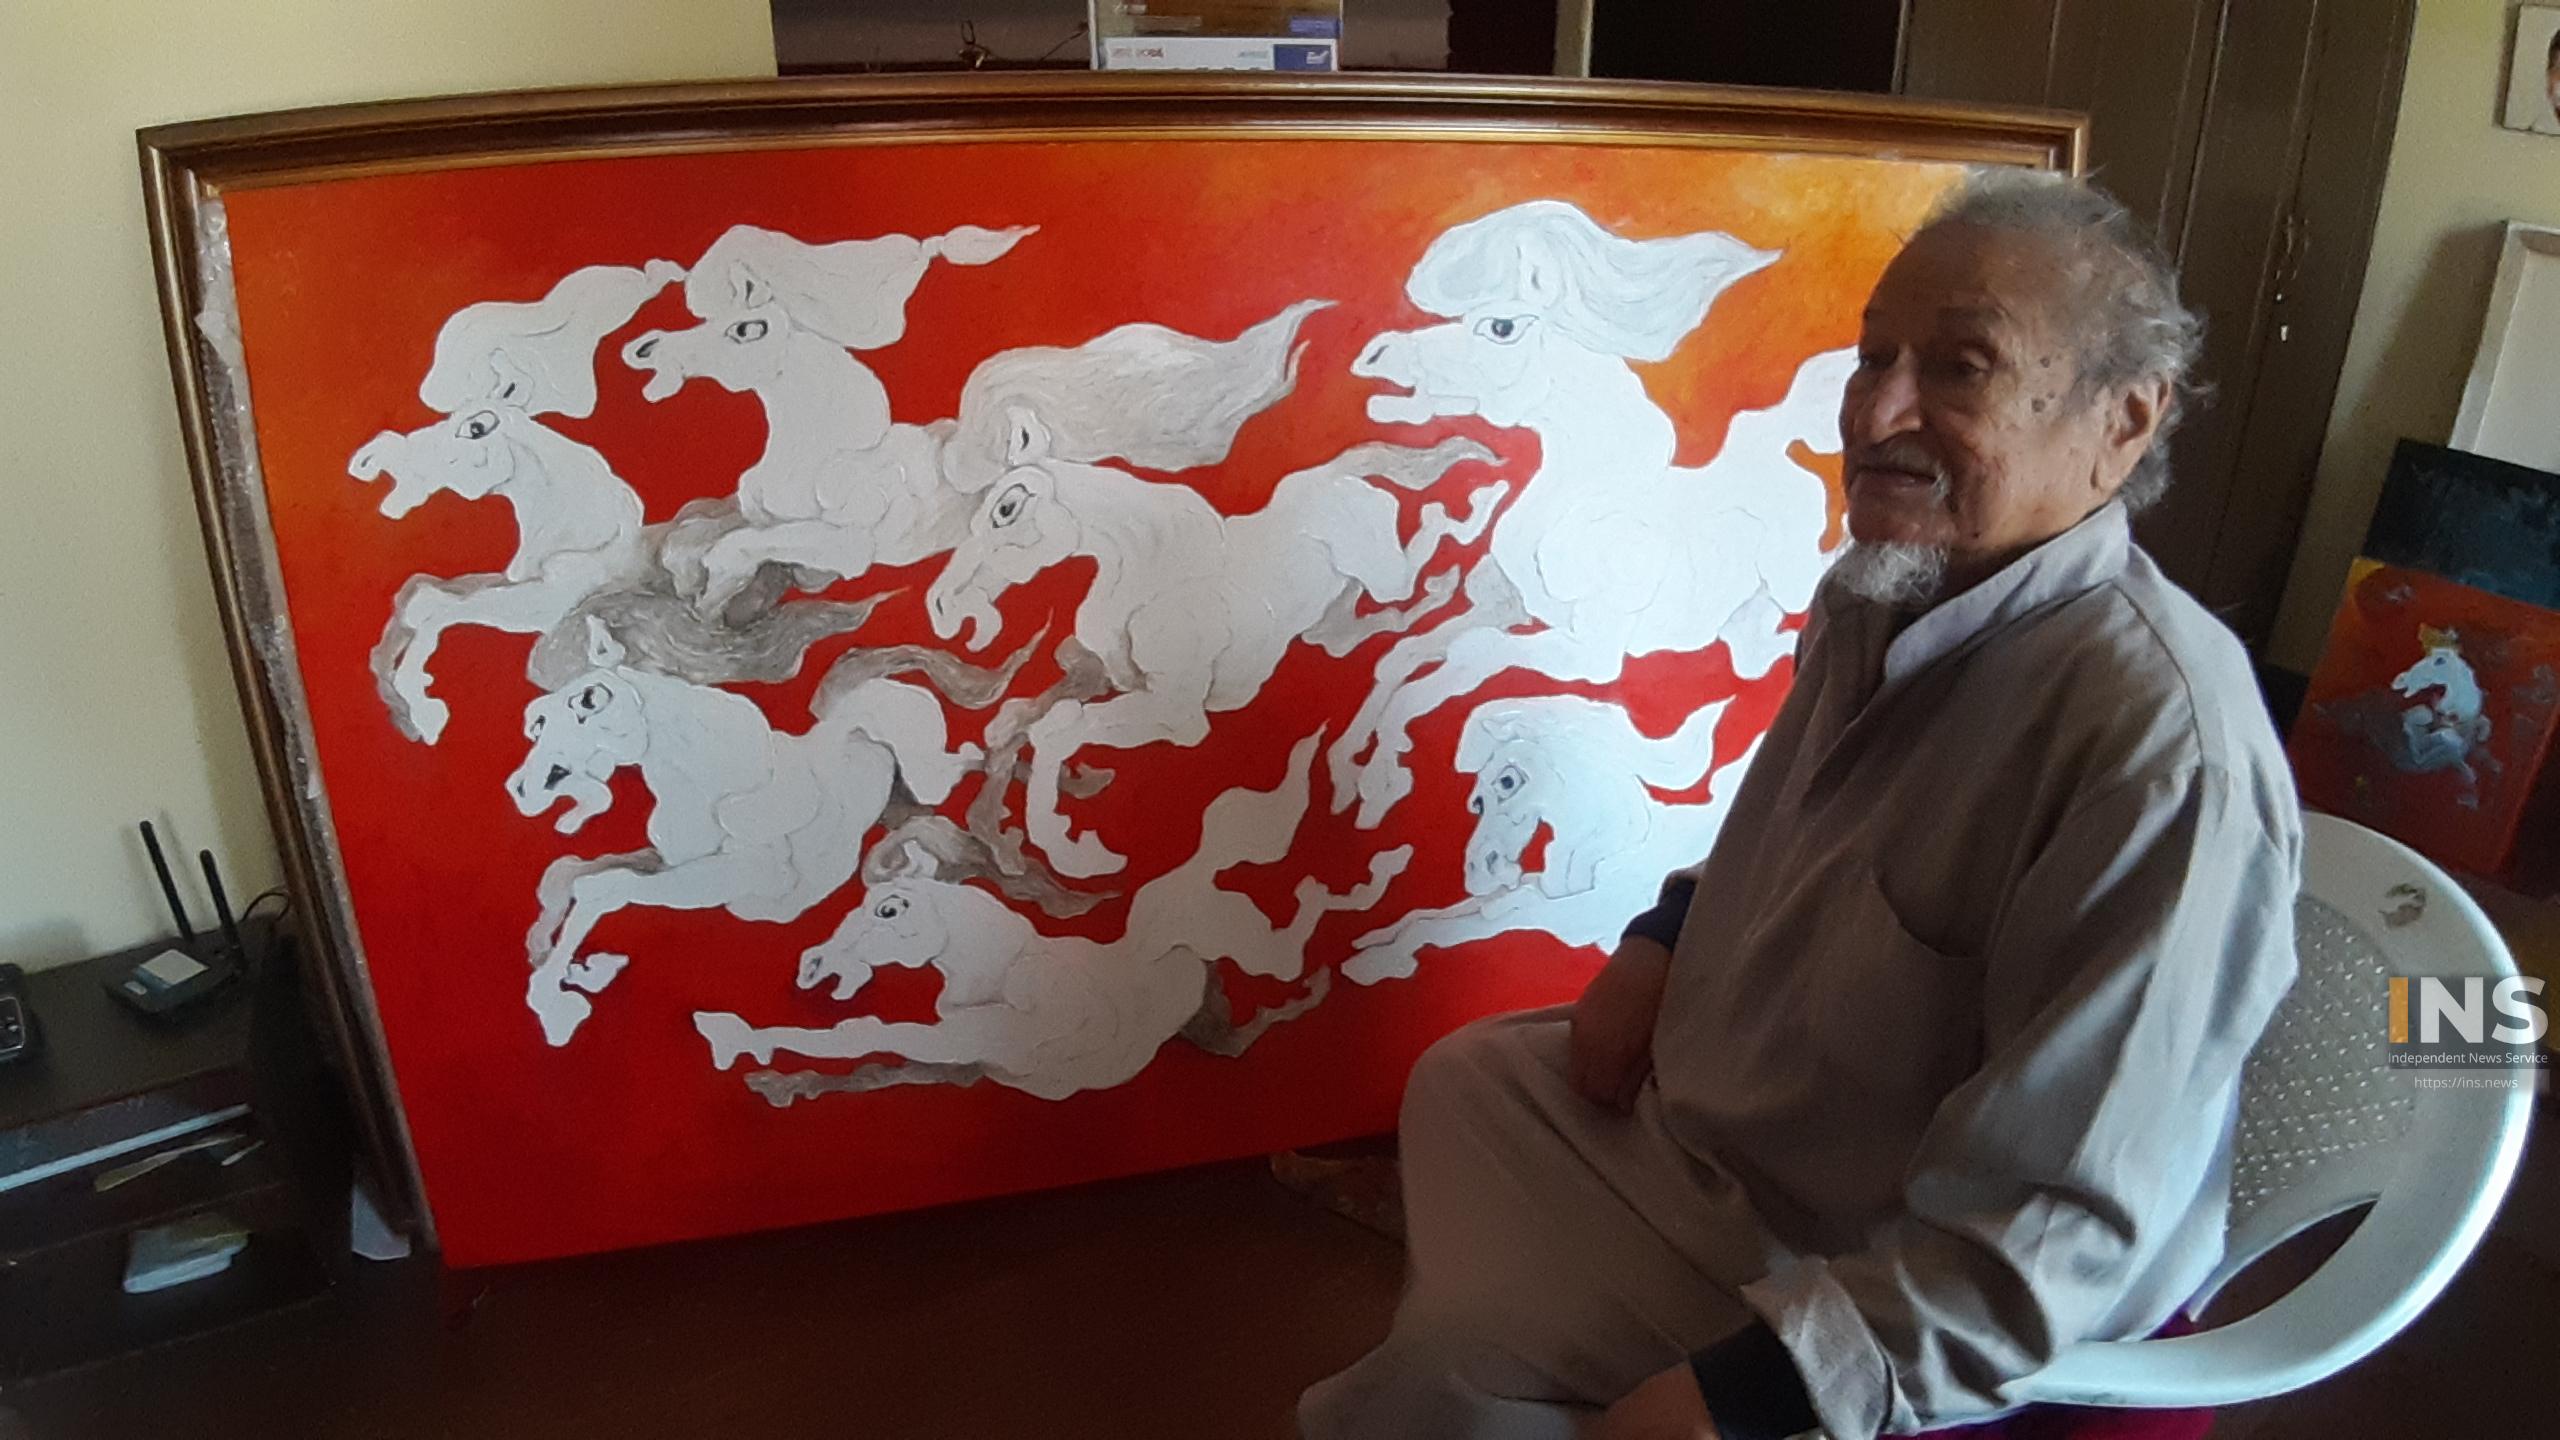 बुर्कुसी मारिरहेका घोडाचित्र विसङ्गति र बेथिति विरुद्धका विद्रोह हुन् : कलाकार शशी शाह